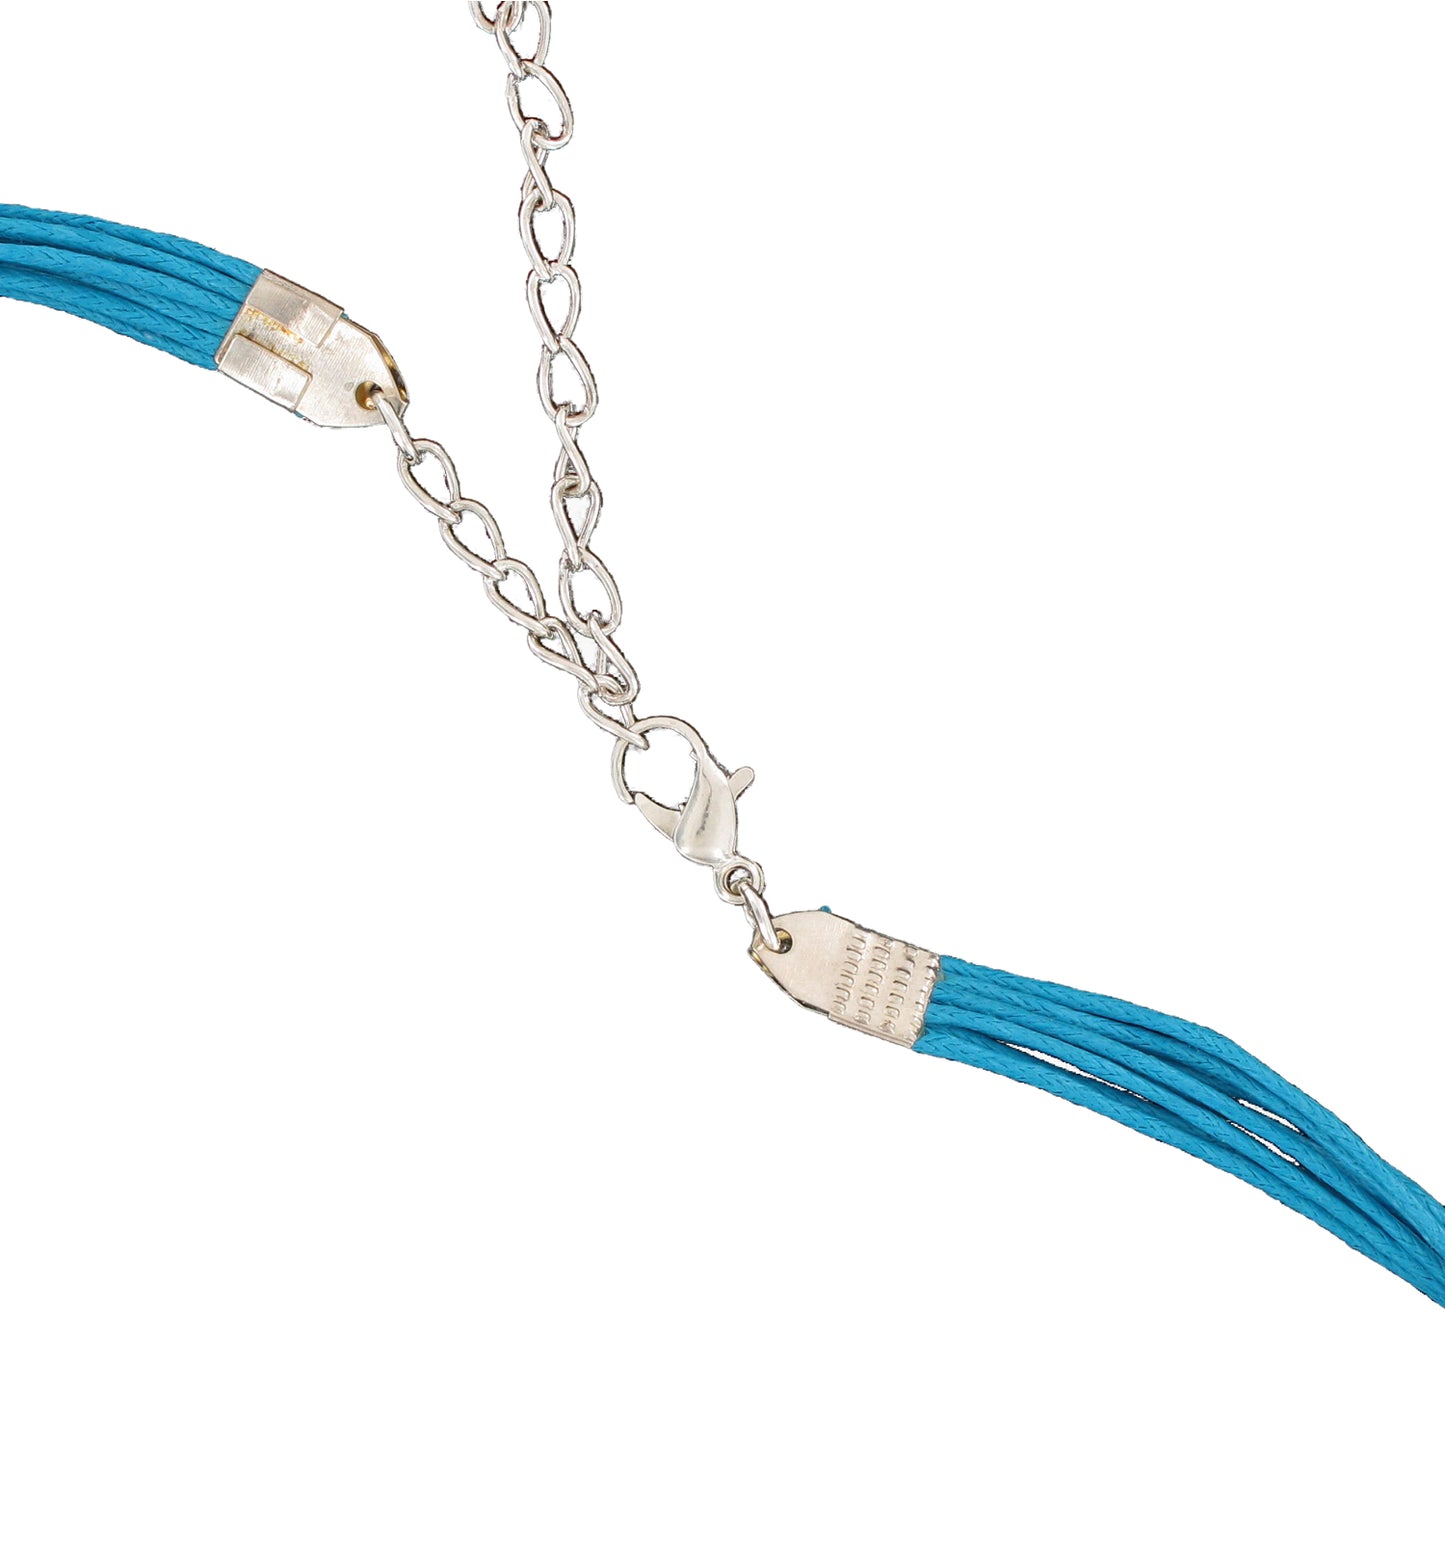 Multistrand Necklace Pendant Dual Tone Turquoise Blue Enamel Silver Tone 16-19"